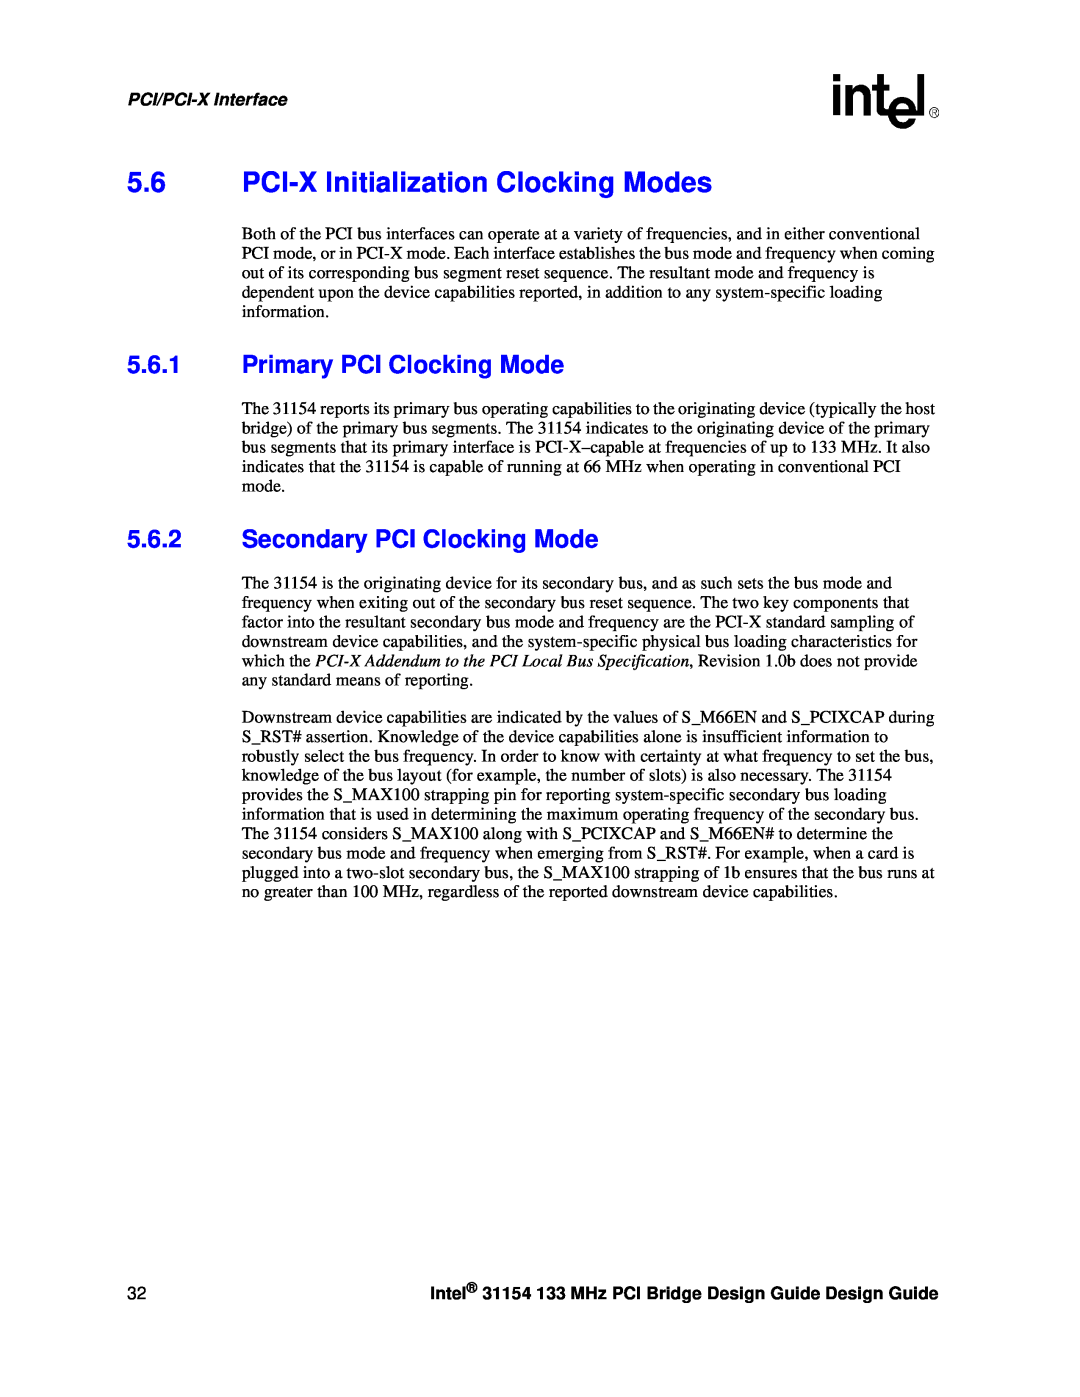 Intel 31154 manual PCI-X Initialization Clocking Modes, Primary PCI Clocking Mode, Secondary PCI Clocking Mode 